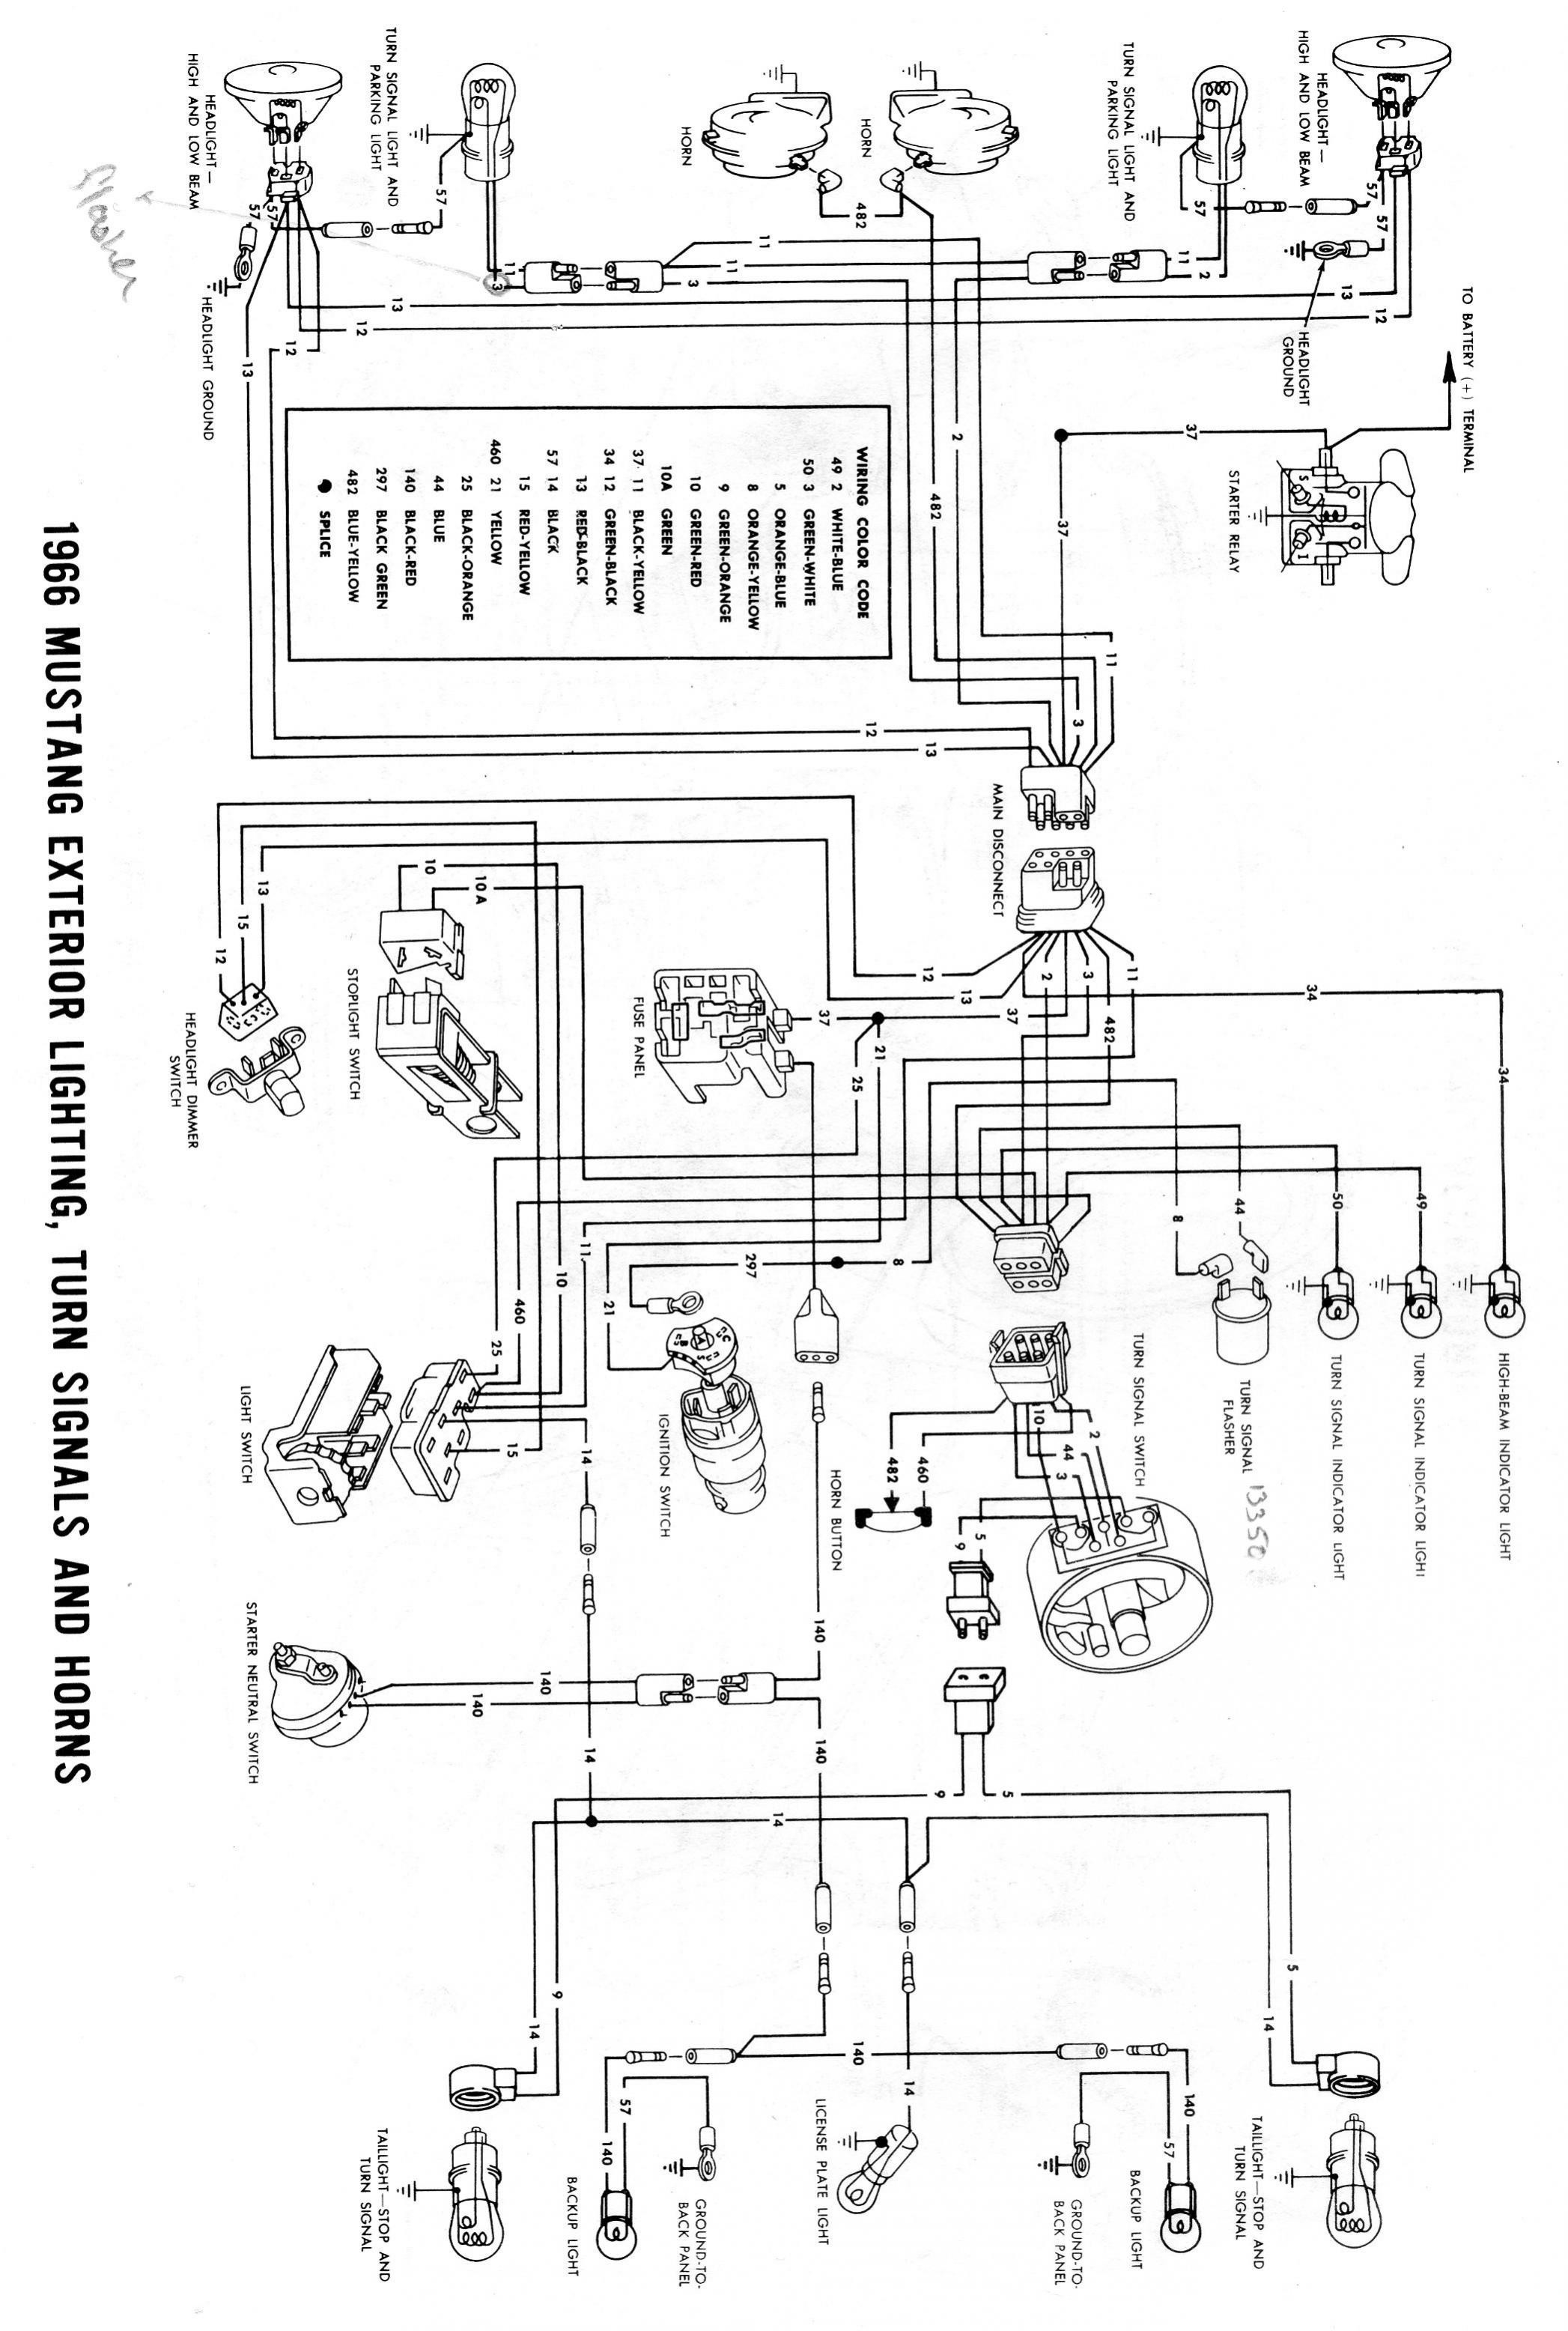 Alternator Wiring Diagram for 1967 Mustang Valid Wiring Diagram Besides 1965 ford Alternator Wiring Diagram Dodge